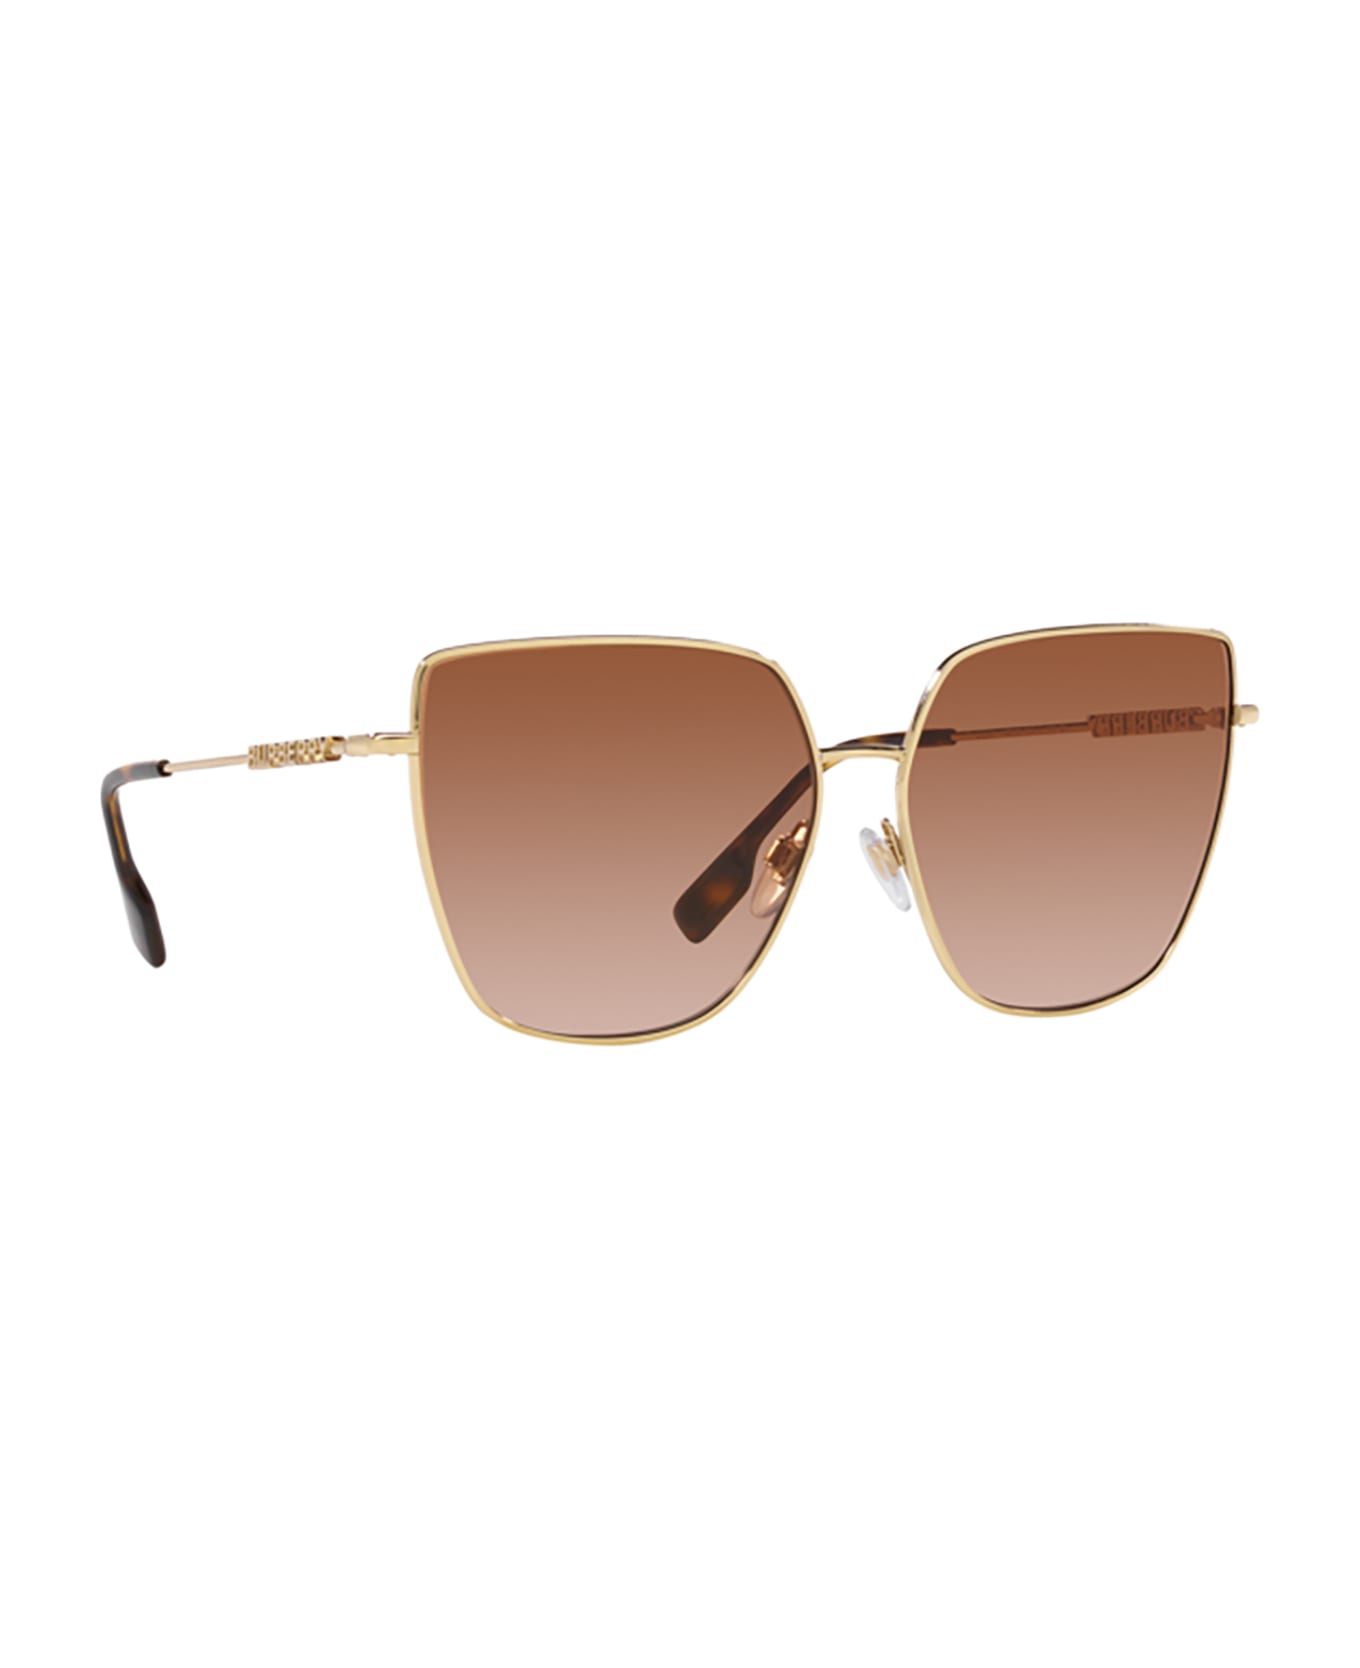 Burberry Eyewear Be3143 Light Gold Sunglasses - Light Gold